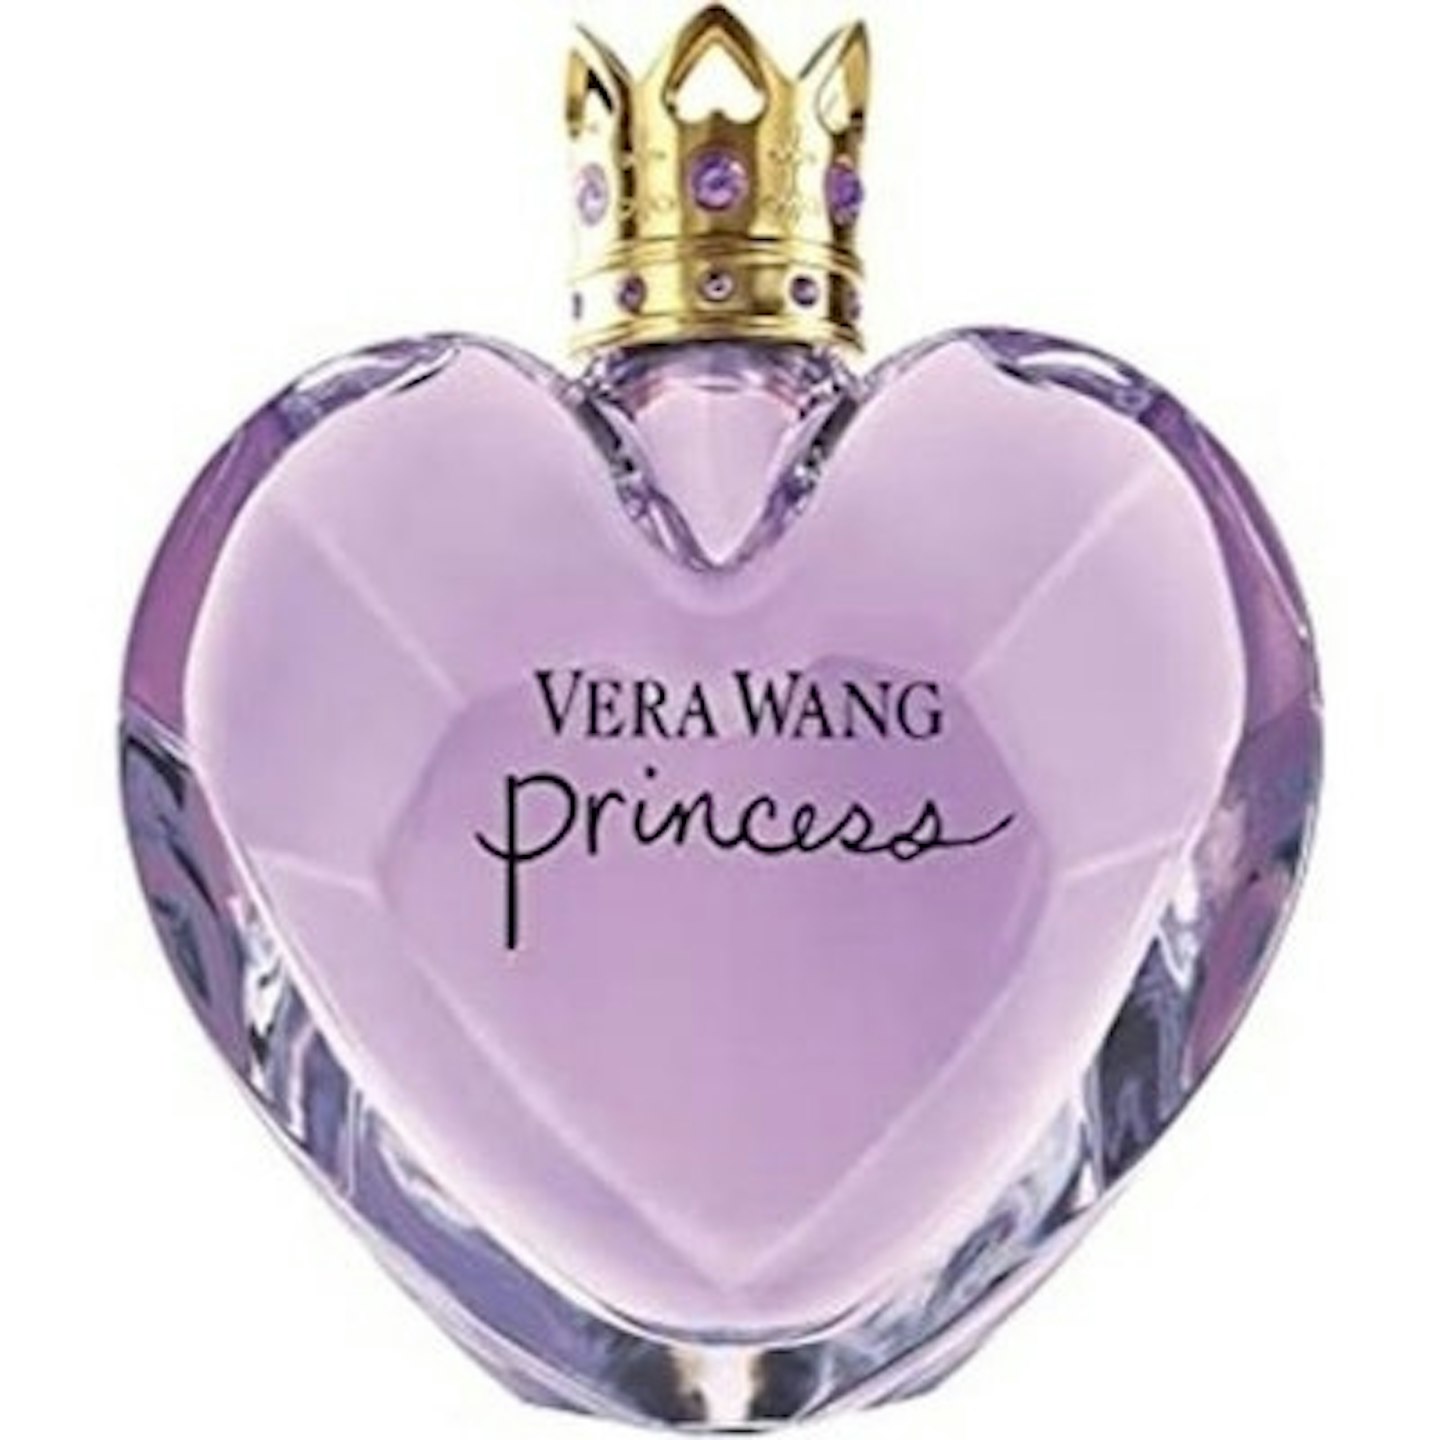 Vera Wang Princess Eau de Toilette for Women, 50 ml